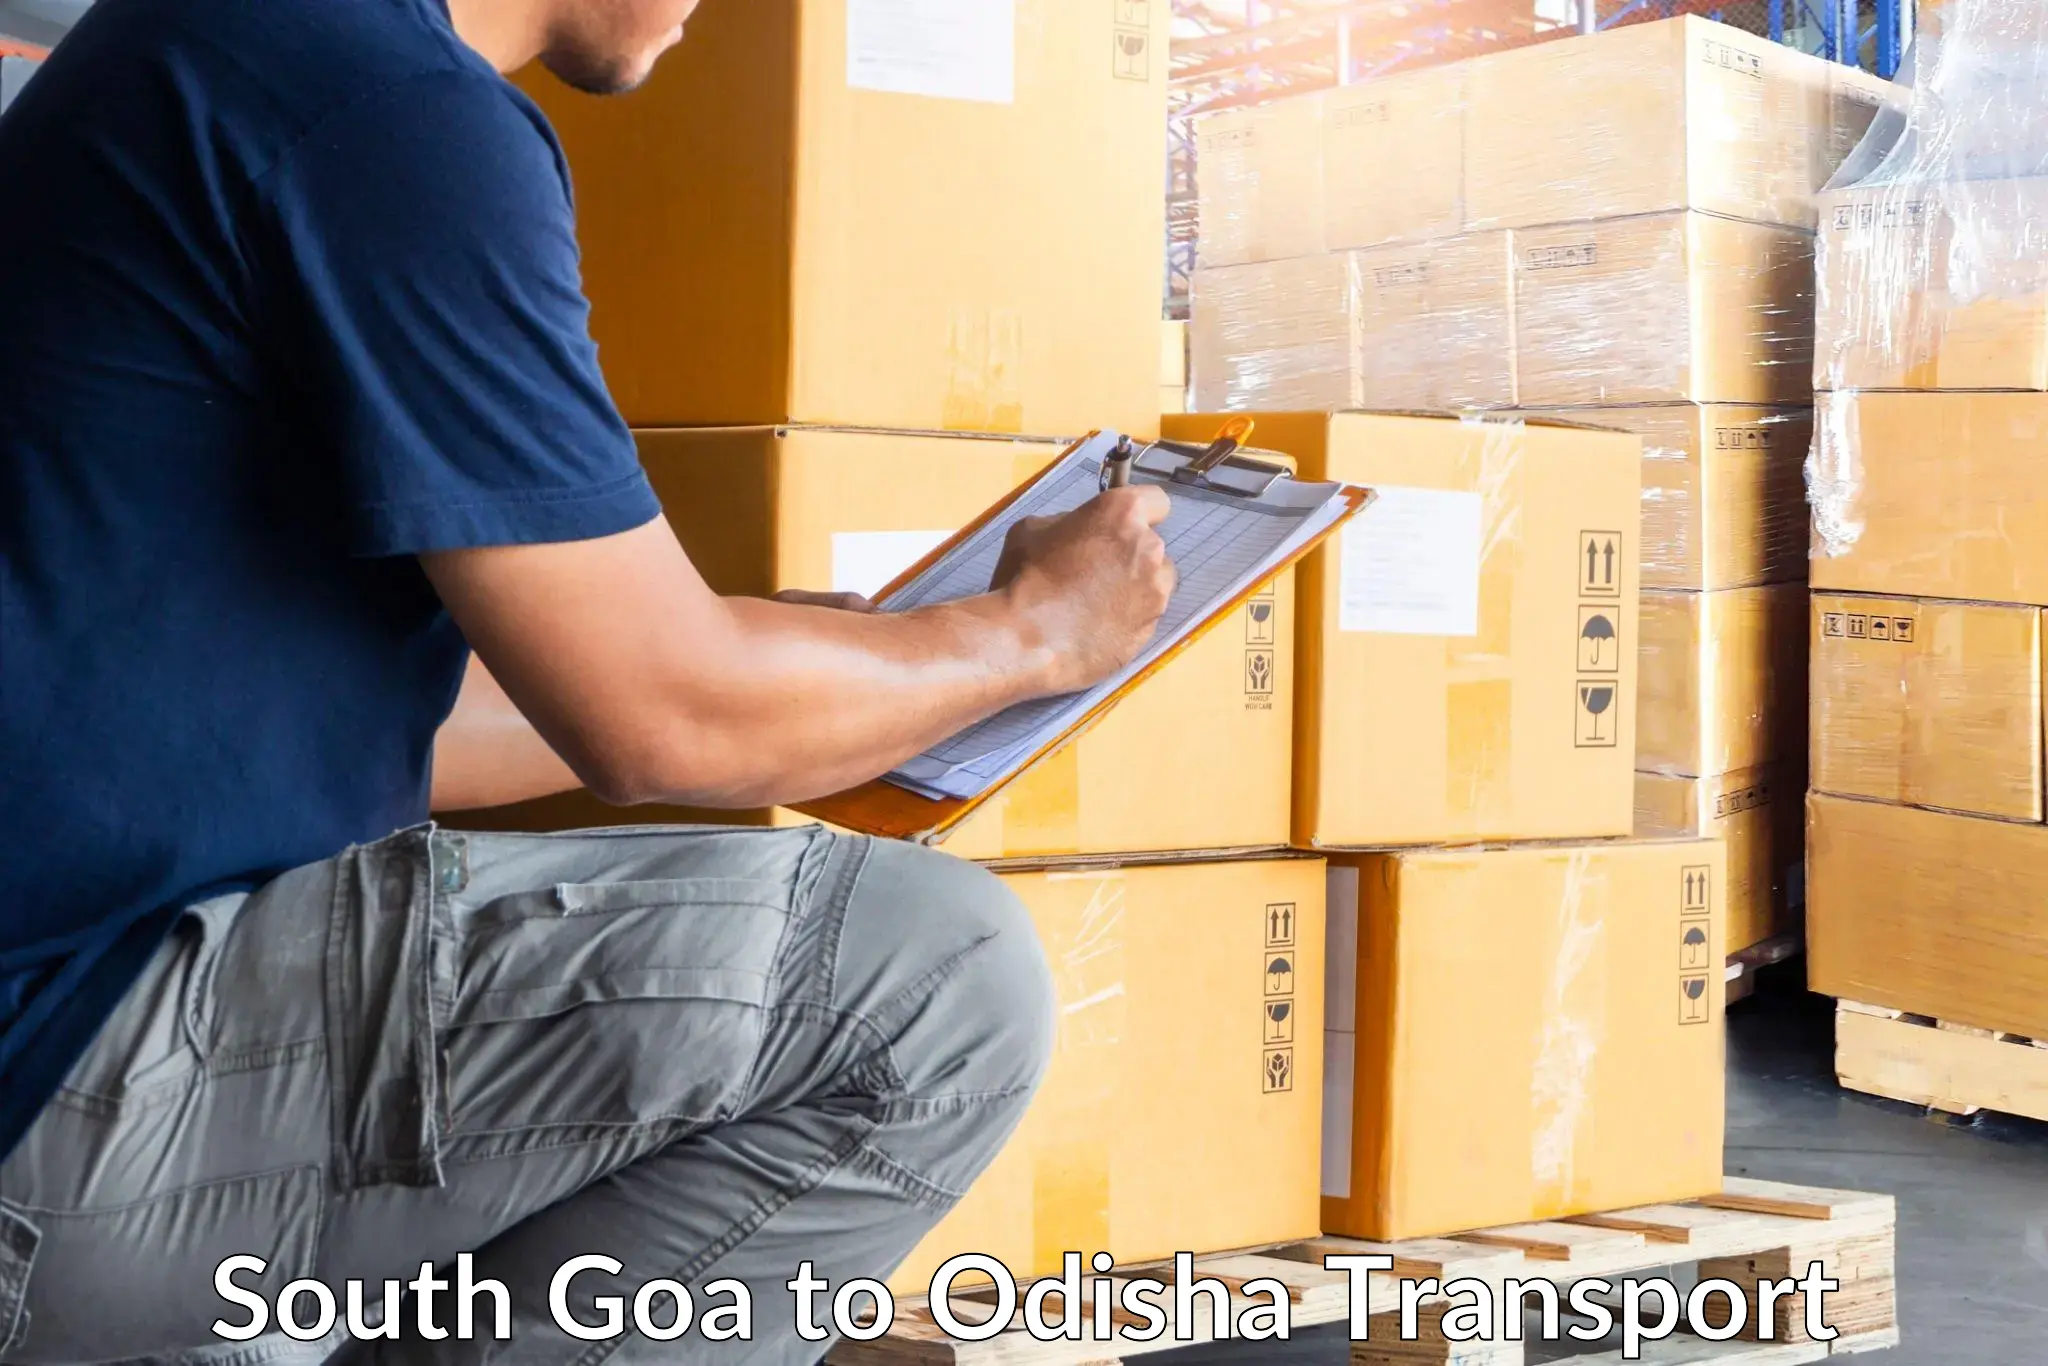 Container transport service South Goa to Komana